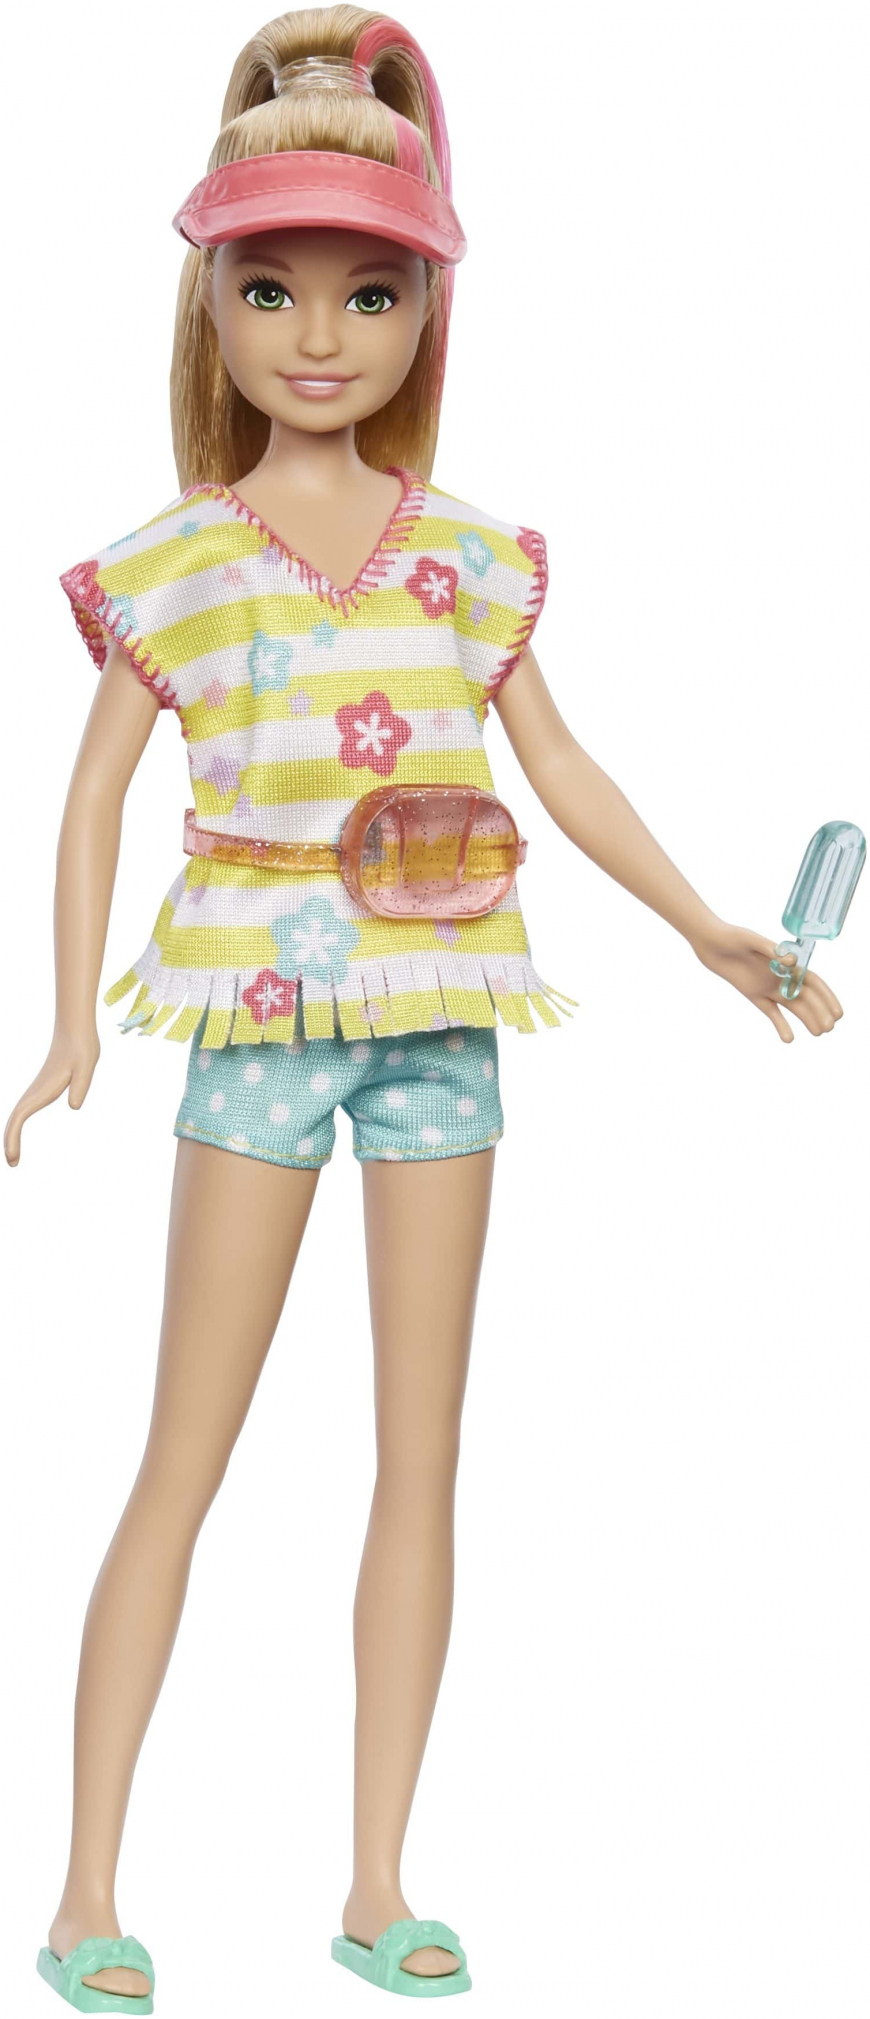 Barbie Mermaid Power Stacie doll